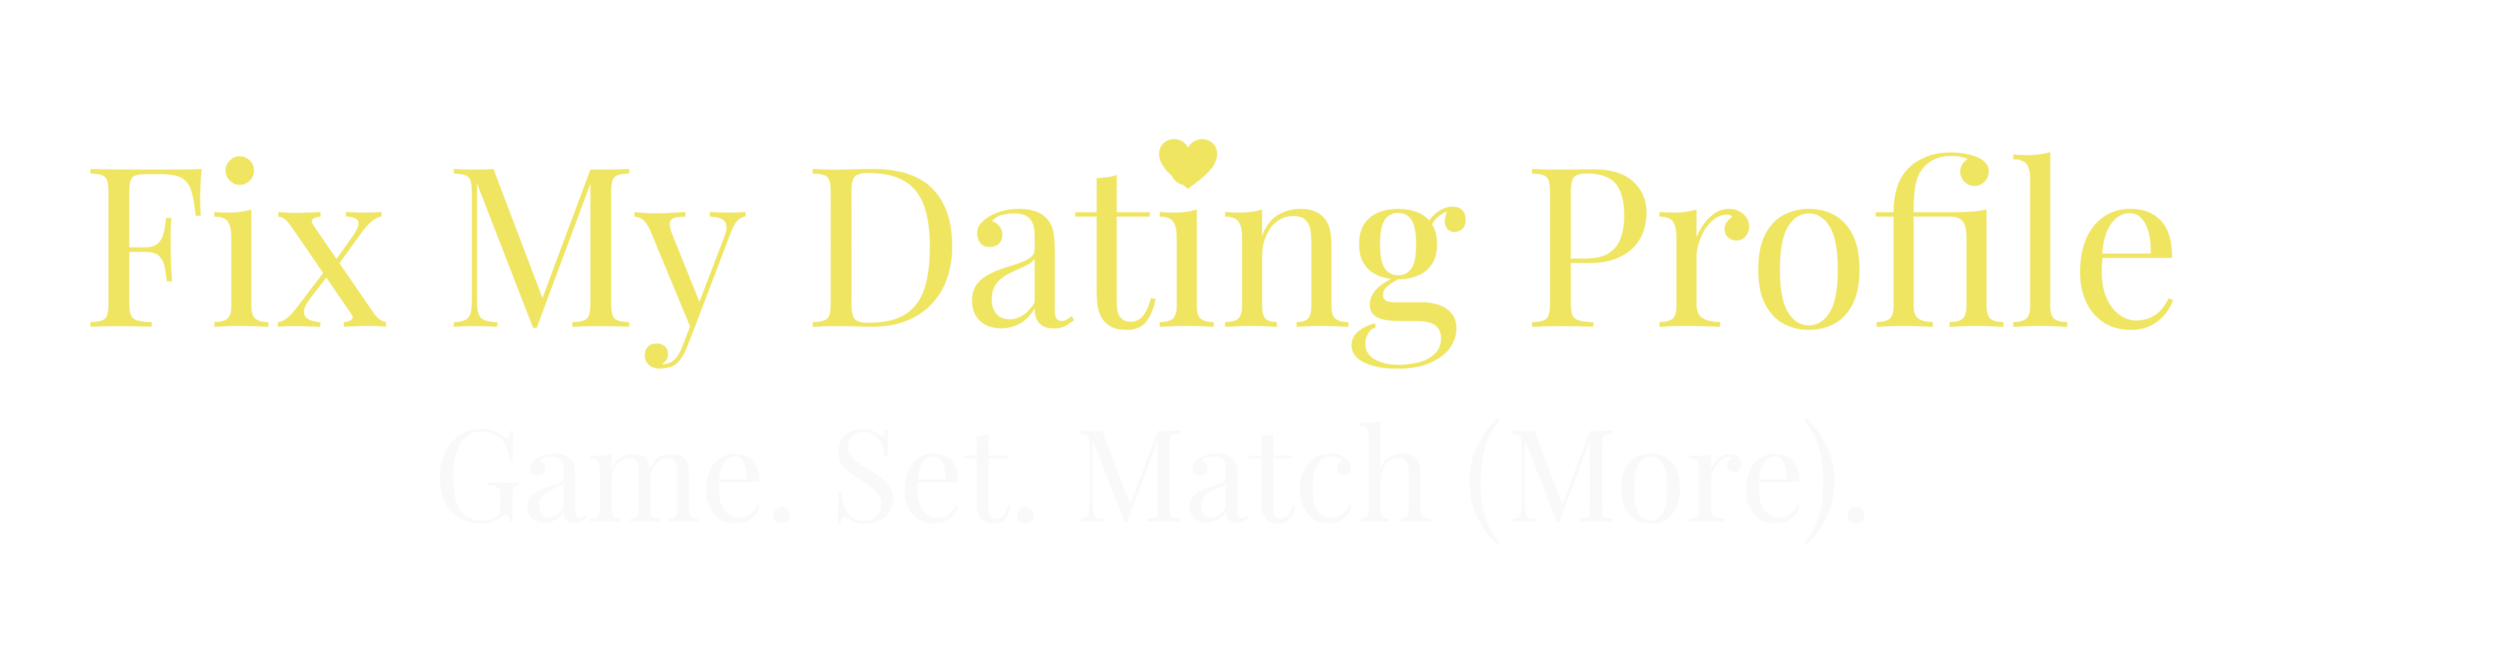 Fix My Dating Profile